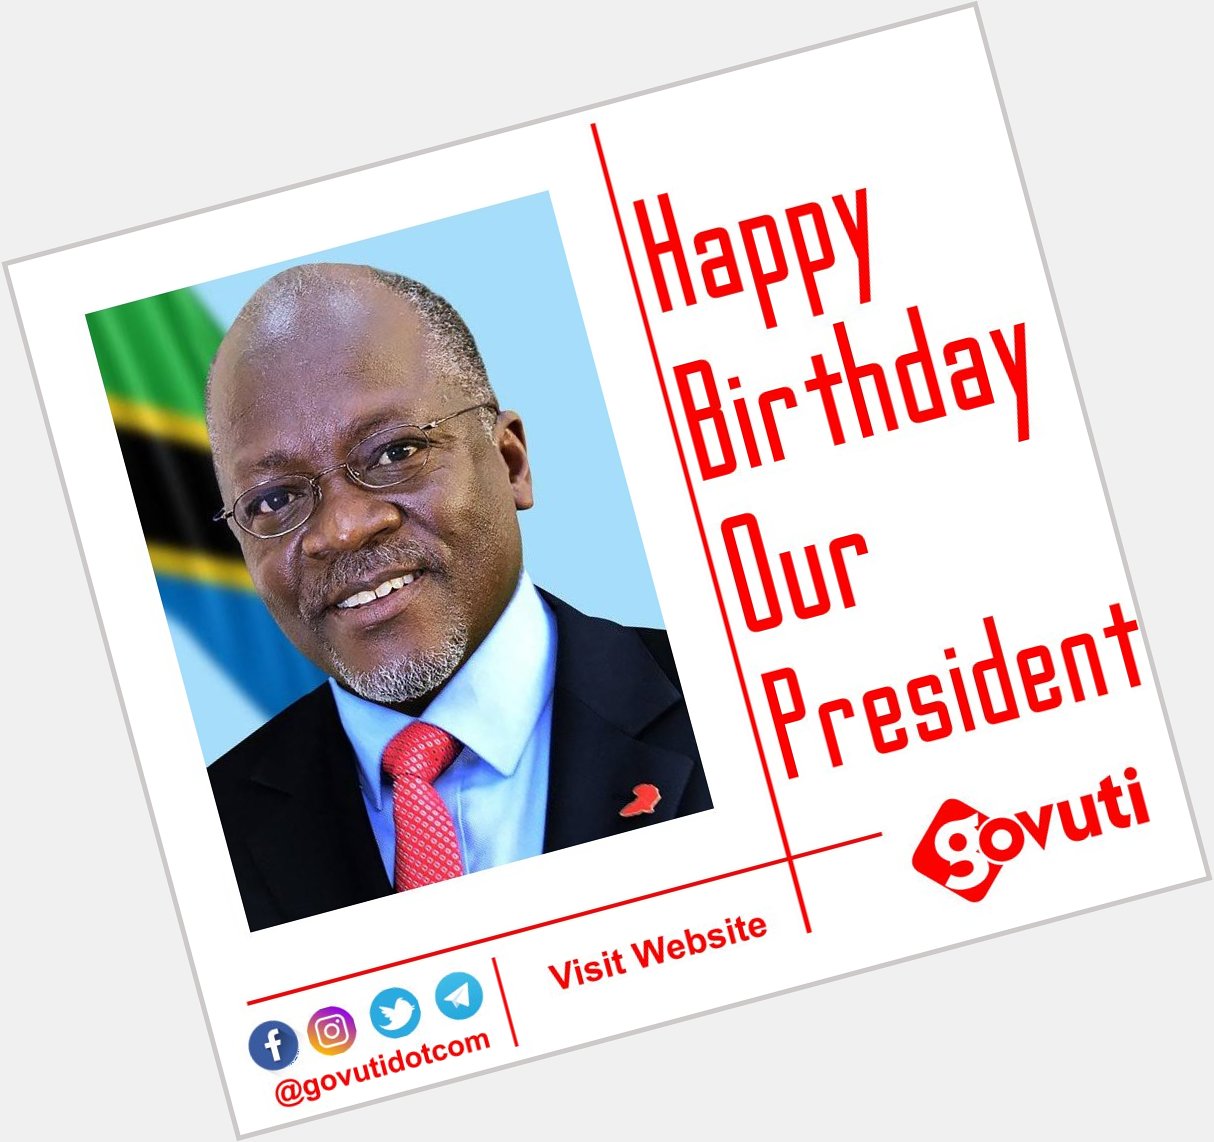 Happy Birthday Our President.
Dr John Pombe Magufuli. 